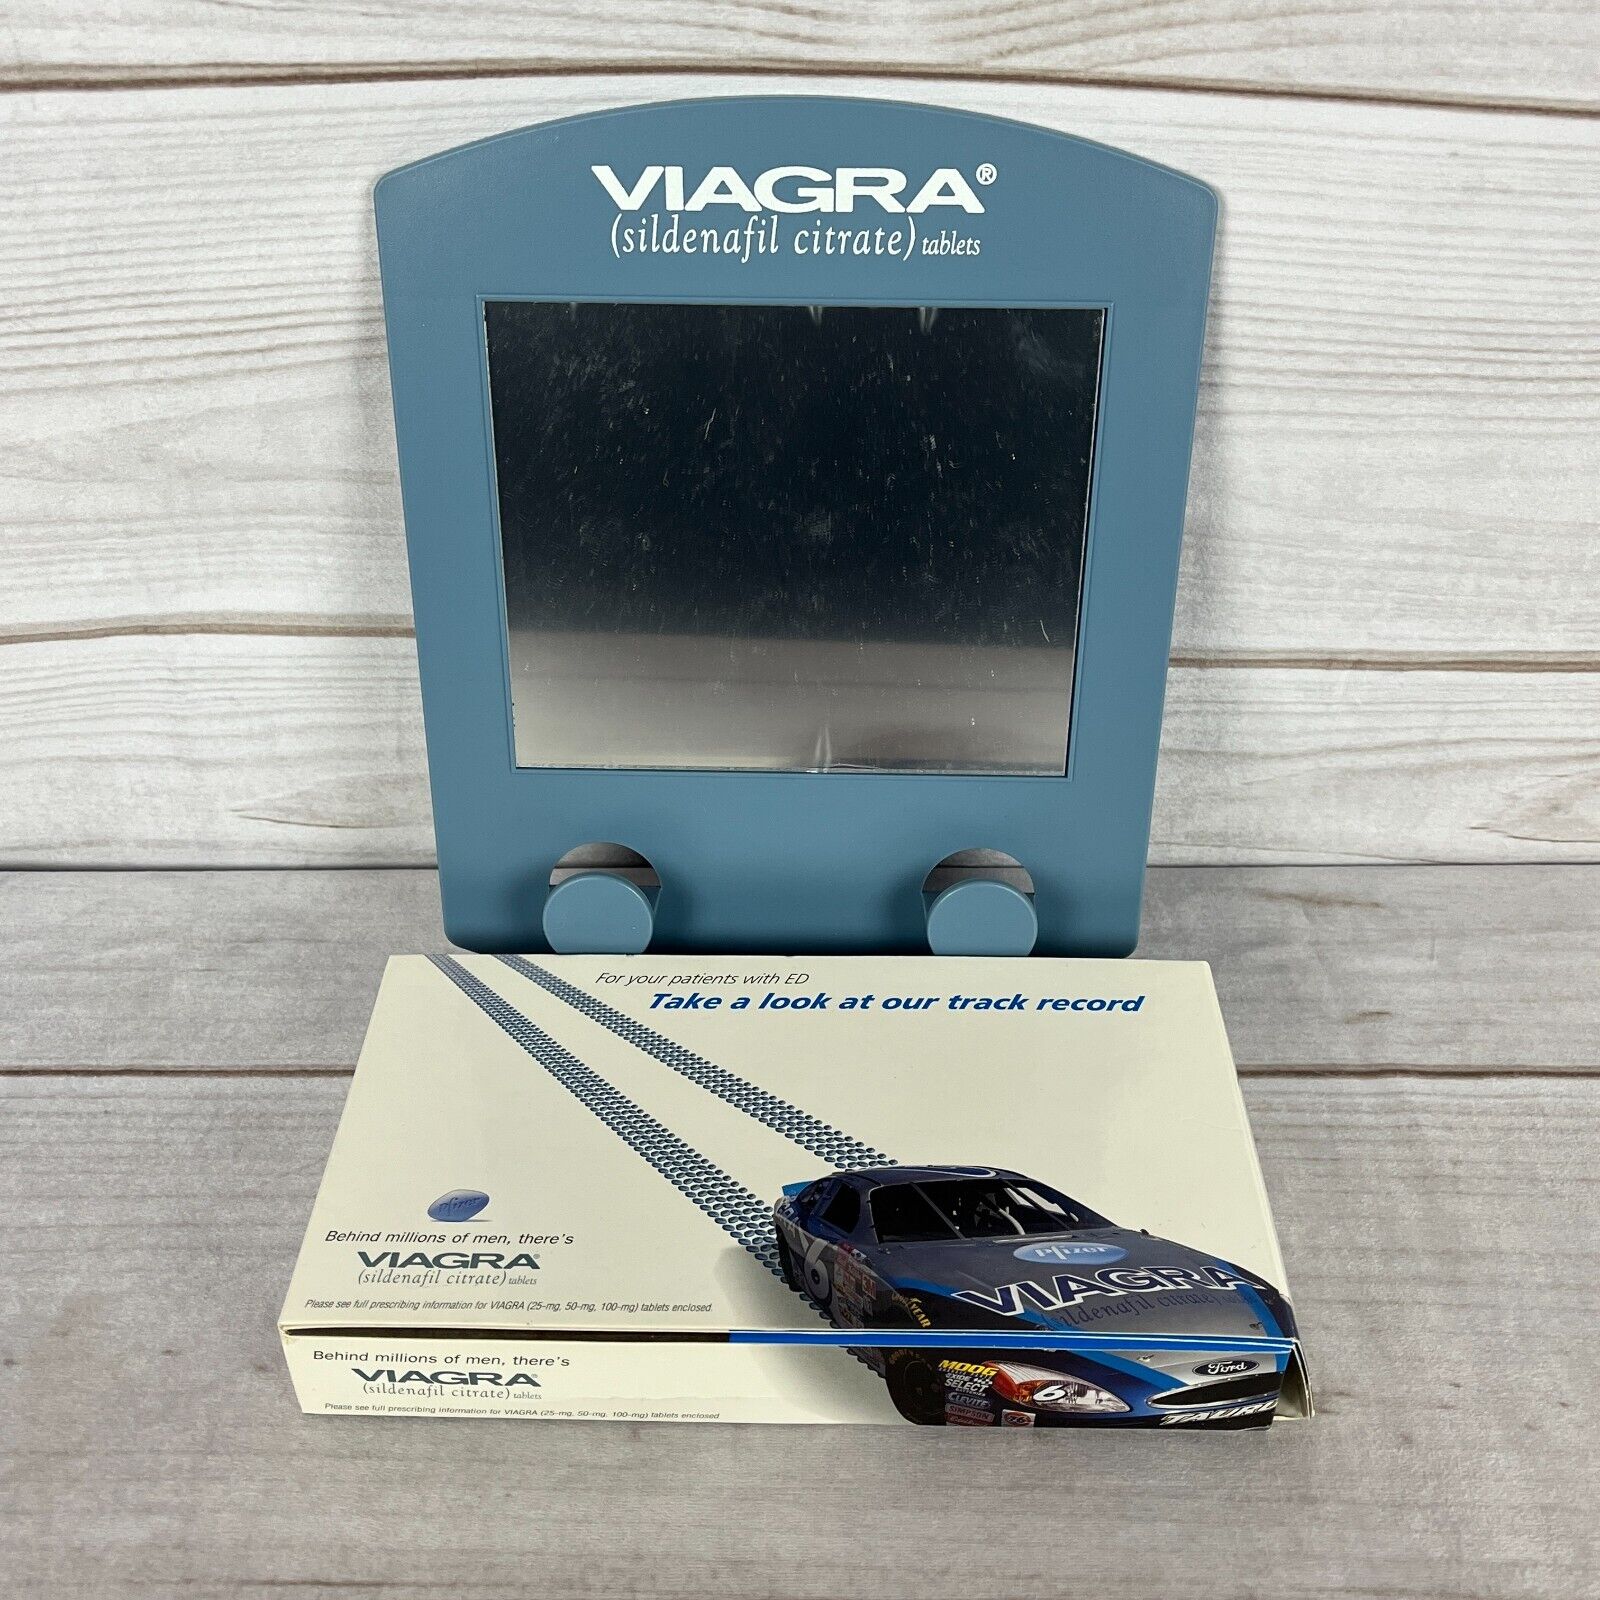 Pfizer Viagra Plastic Mirror & Diecast Racecar Novelty Gag Gift Blue